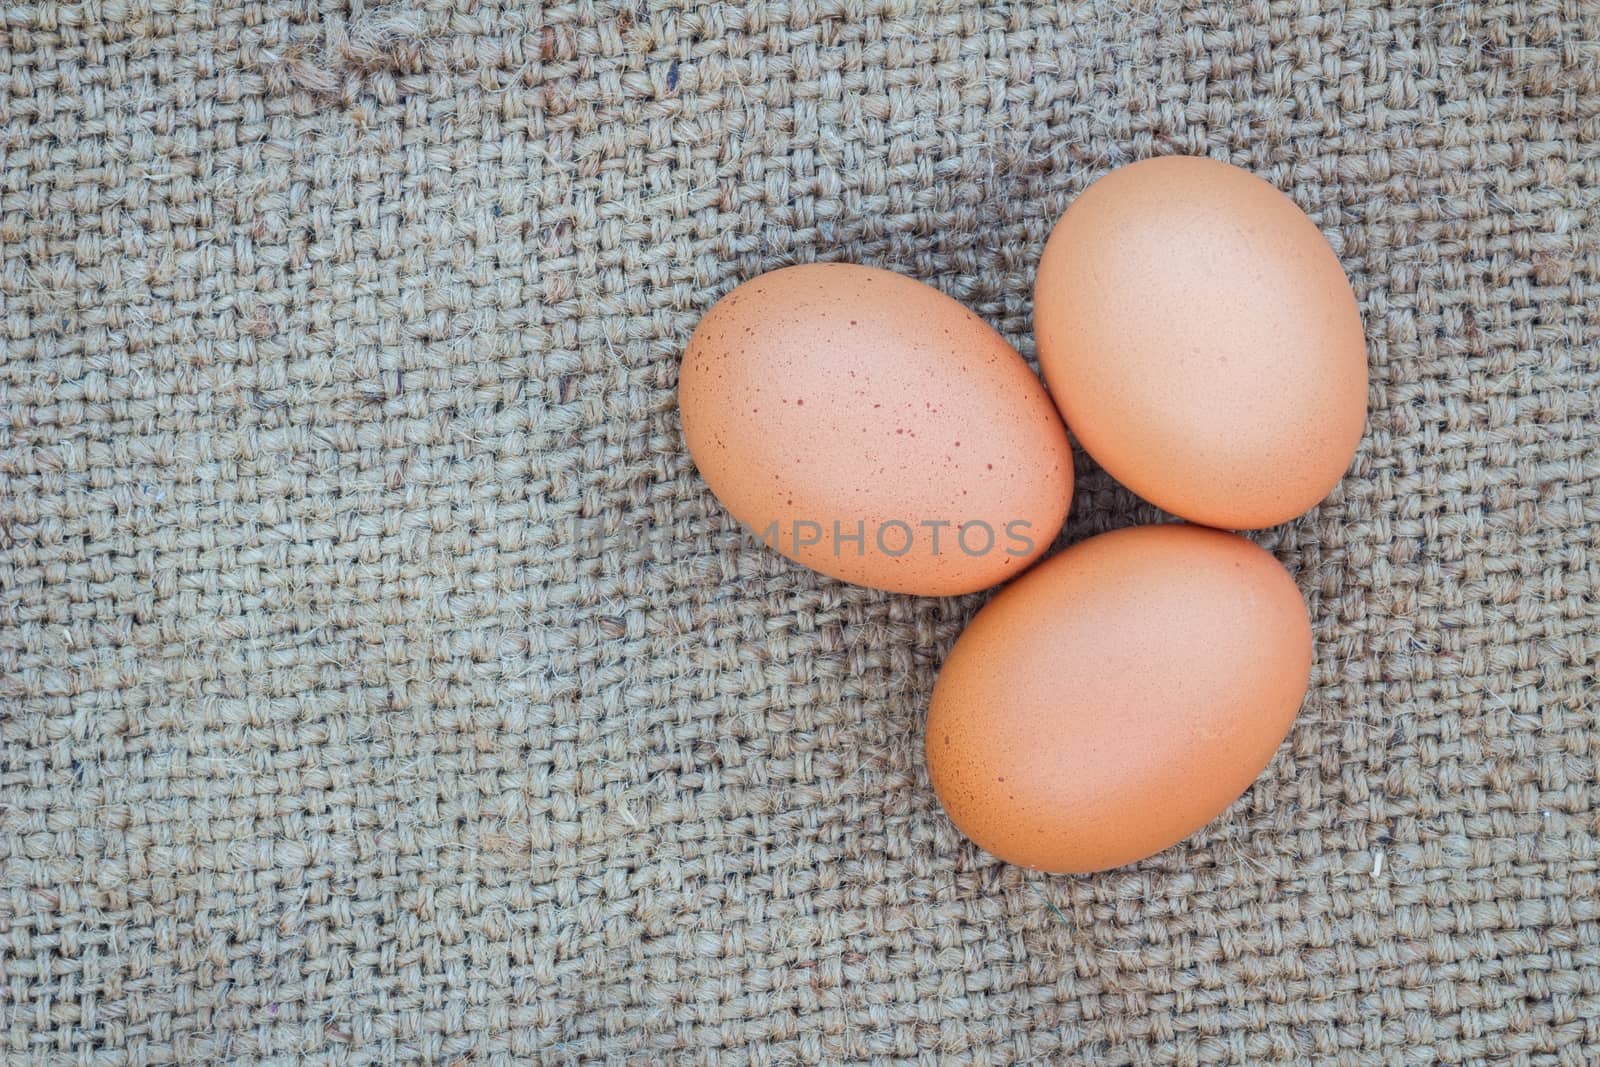  eggs on gunnysack  by a3701027